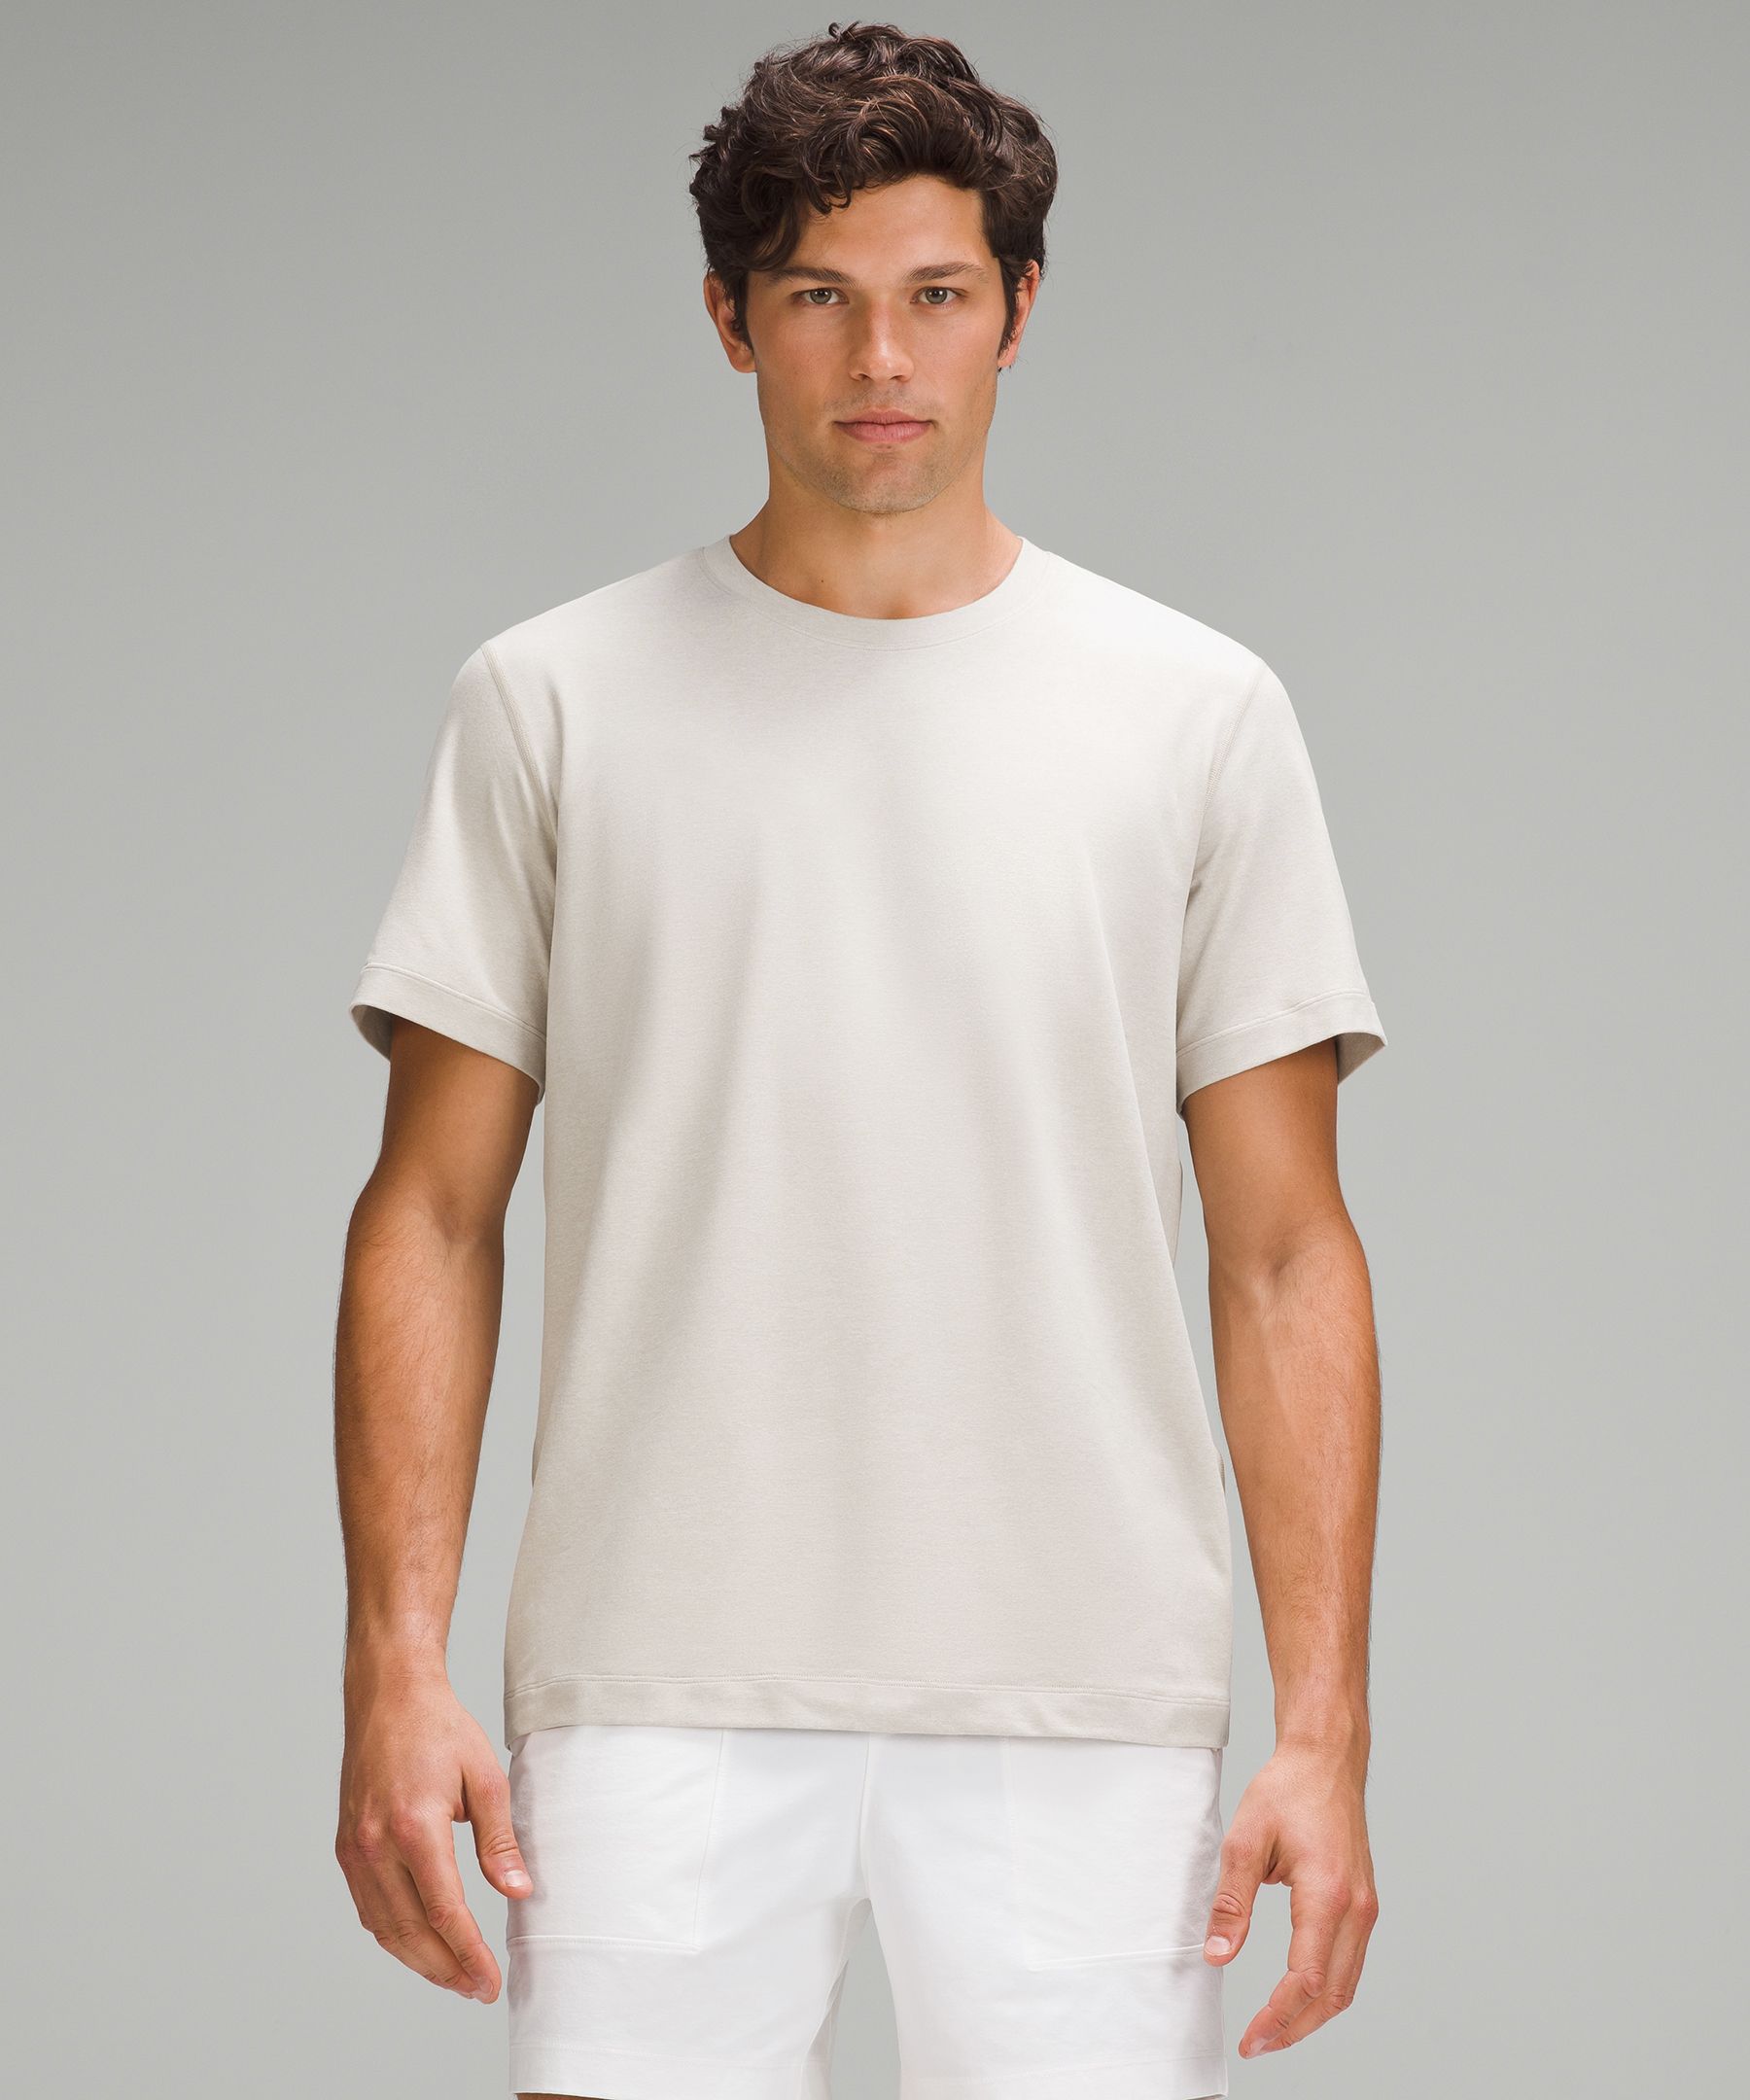 Lululemon Athletica Solid Green Short Sleeve T-Shirt Size 8 - 35% off